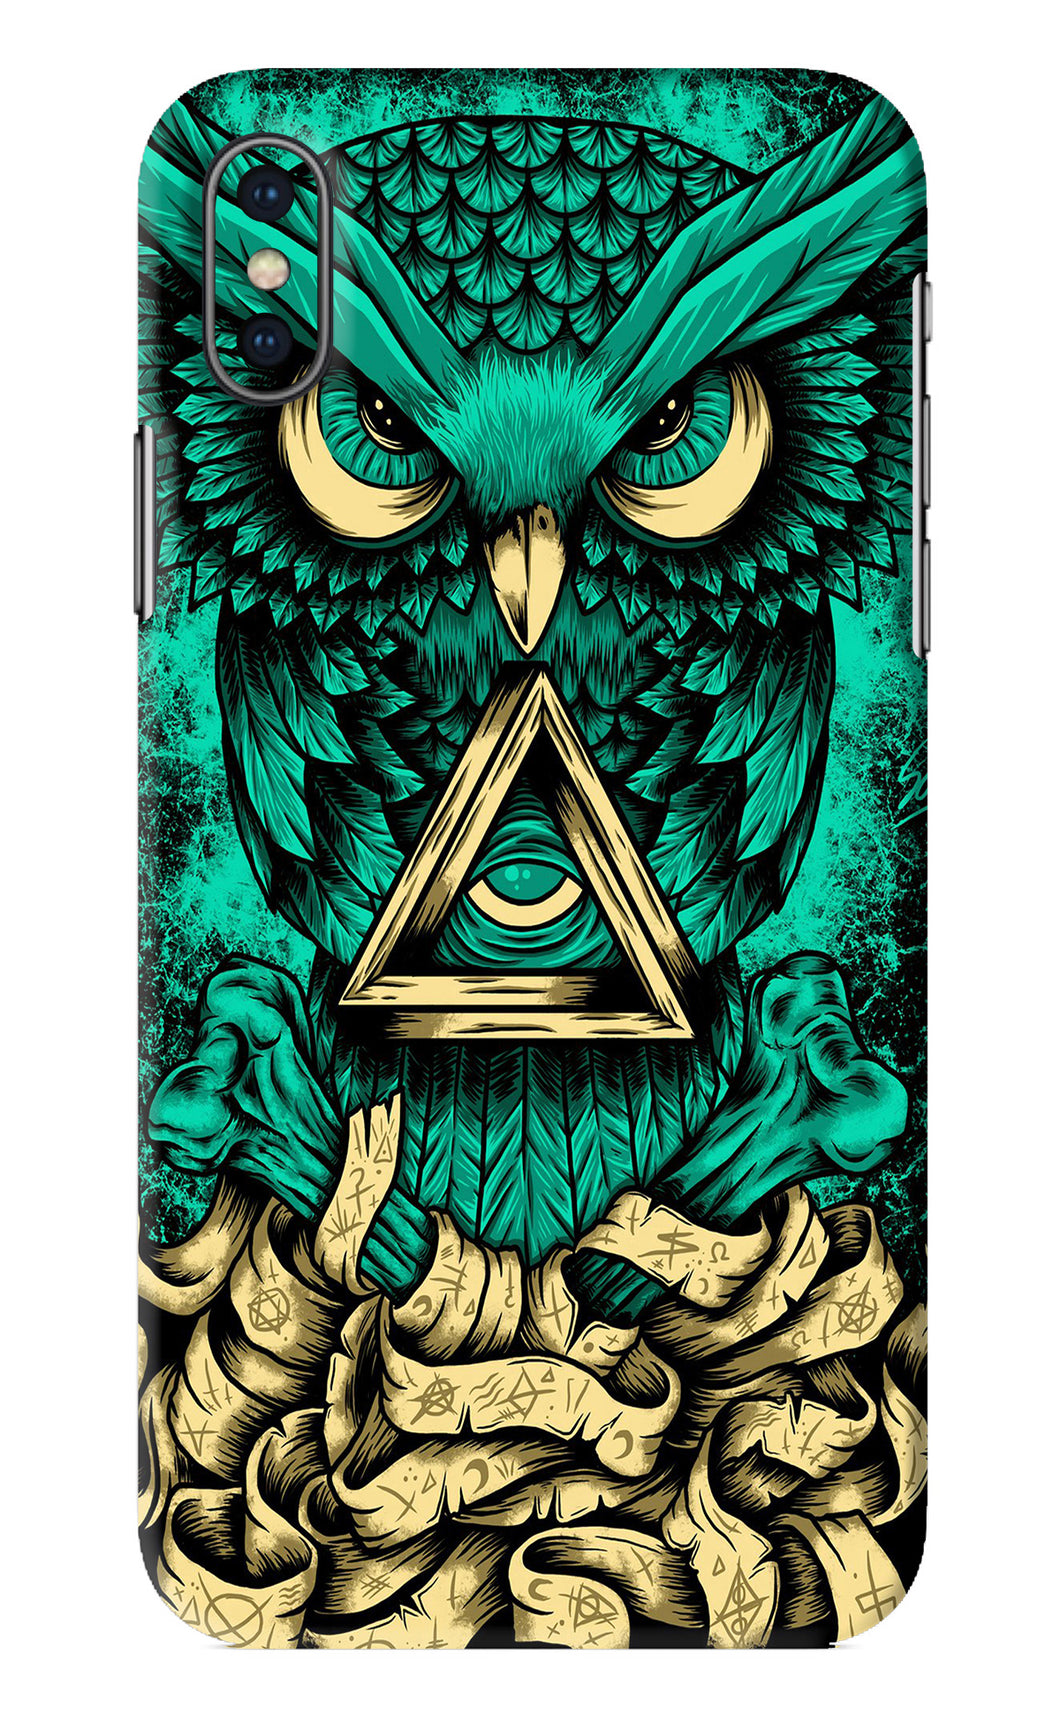 Green Owl iPhone X Back Skin Wrap